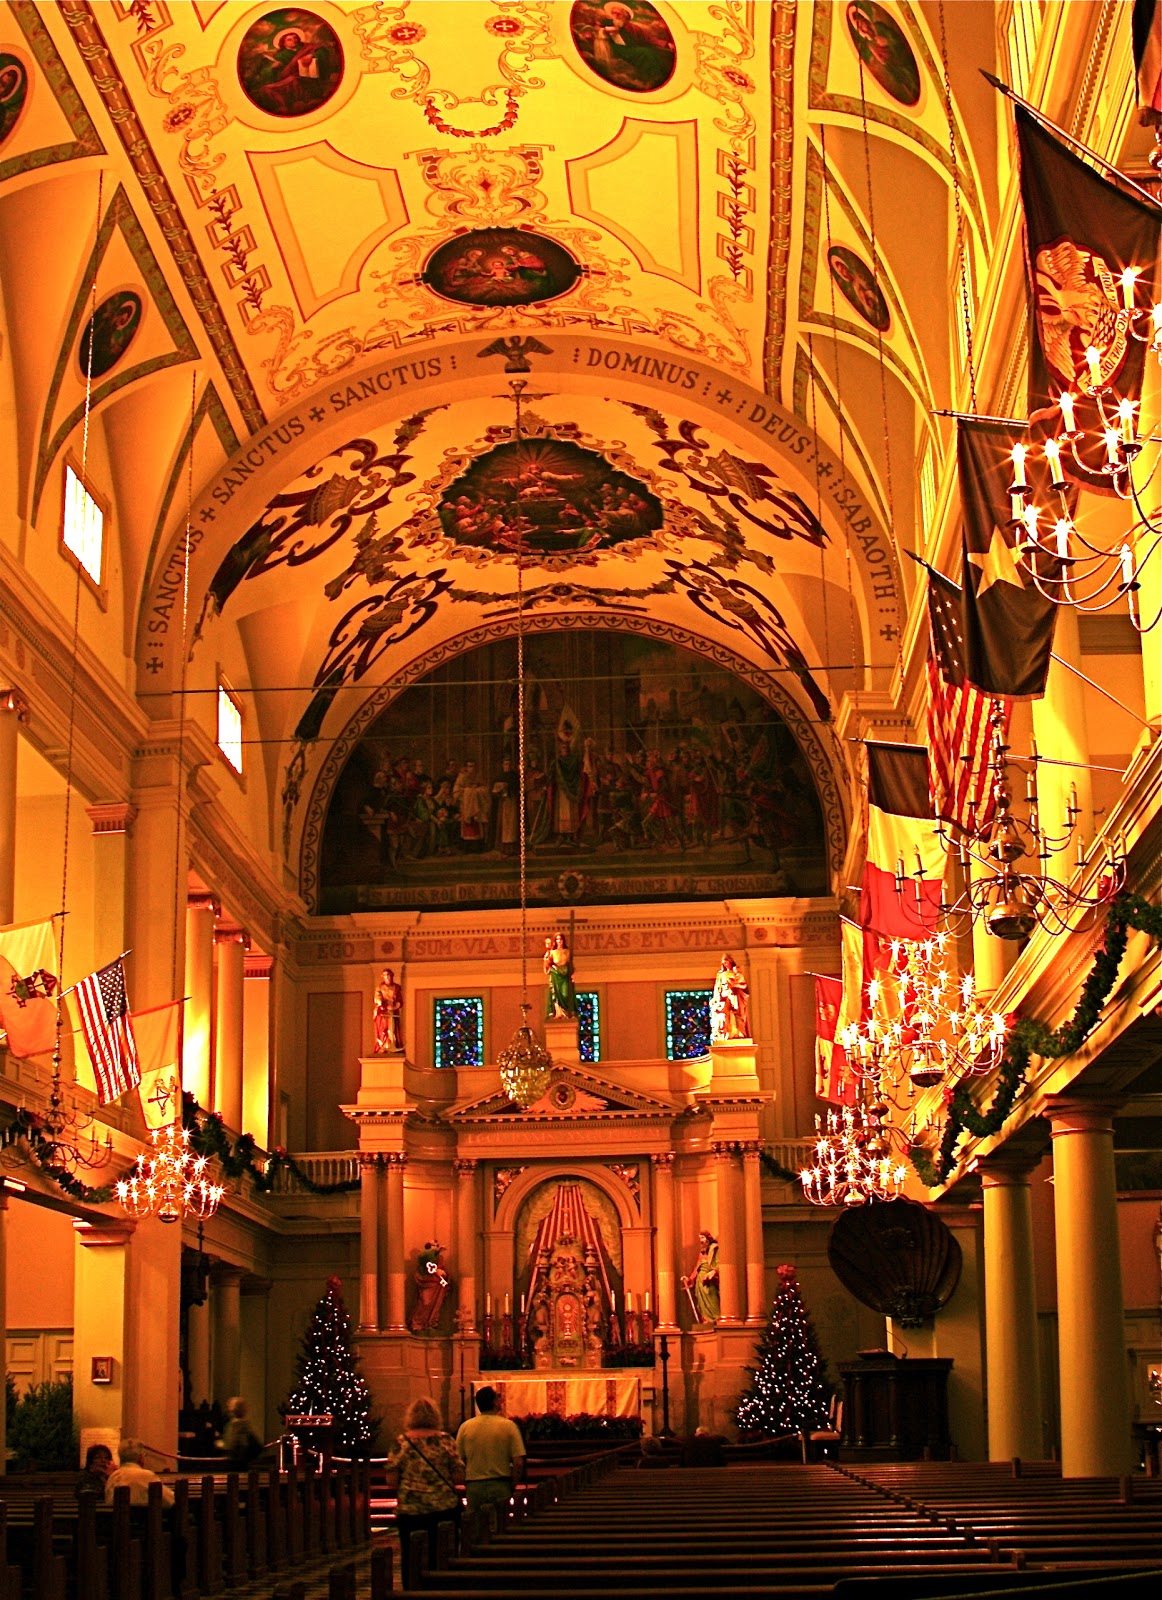 NOLA LifeStyle: Saint Louis Cathedral Interior